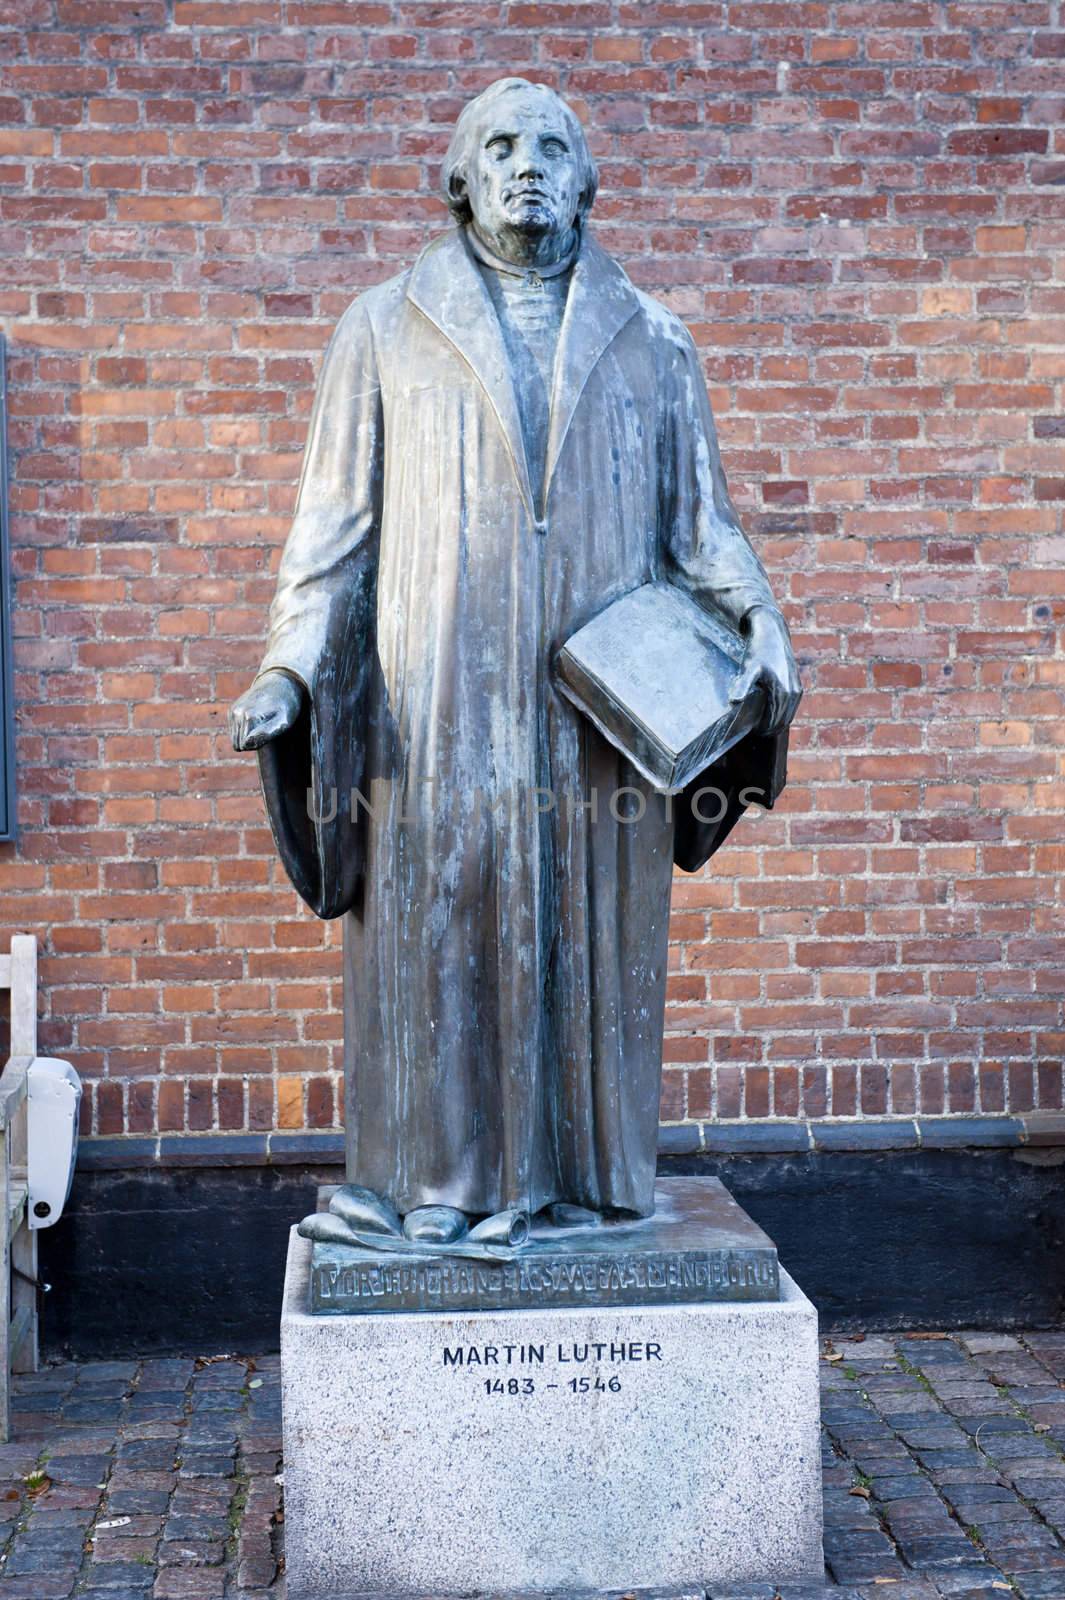 Martin Luther memorial in the Copenhagen, Denmark